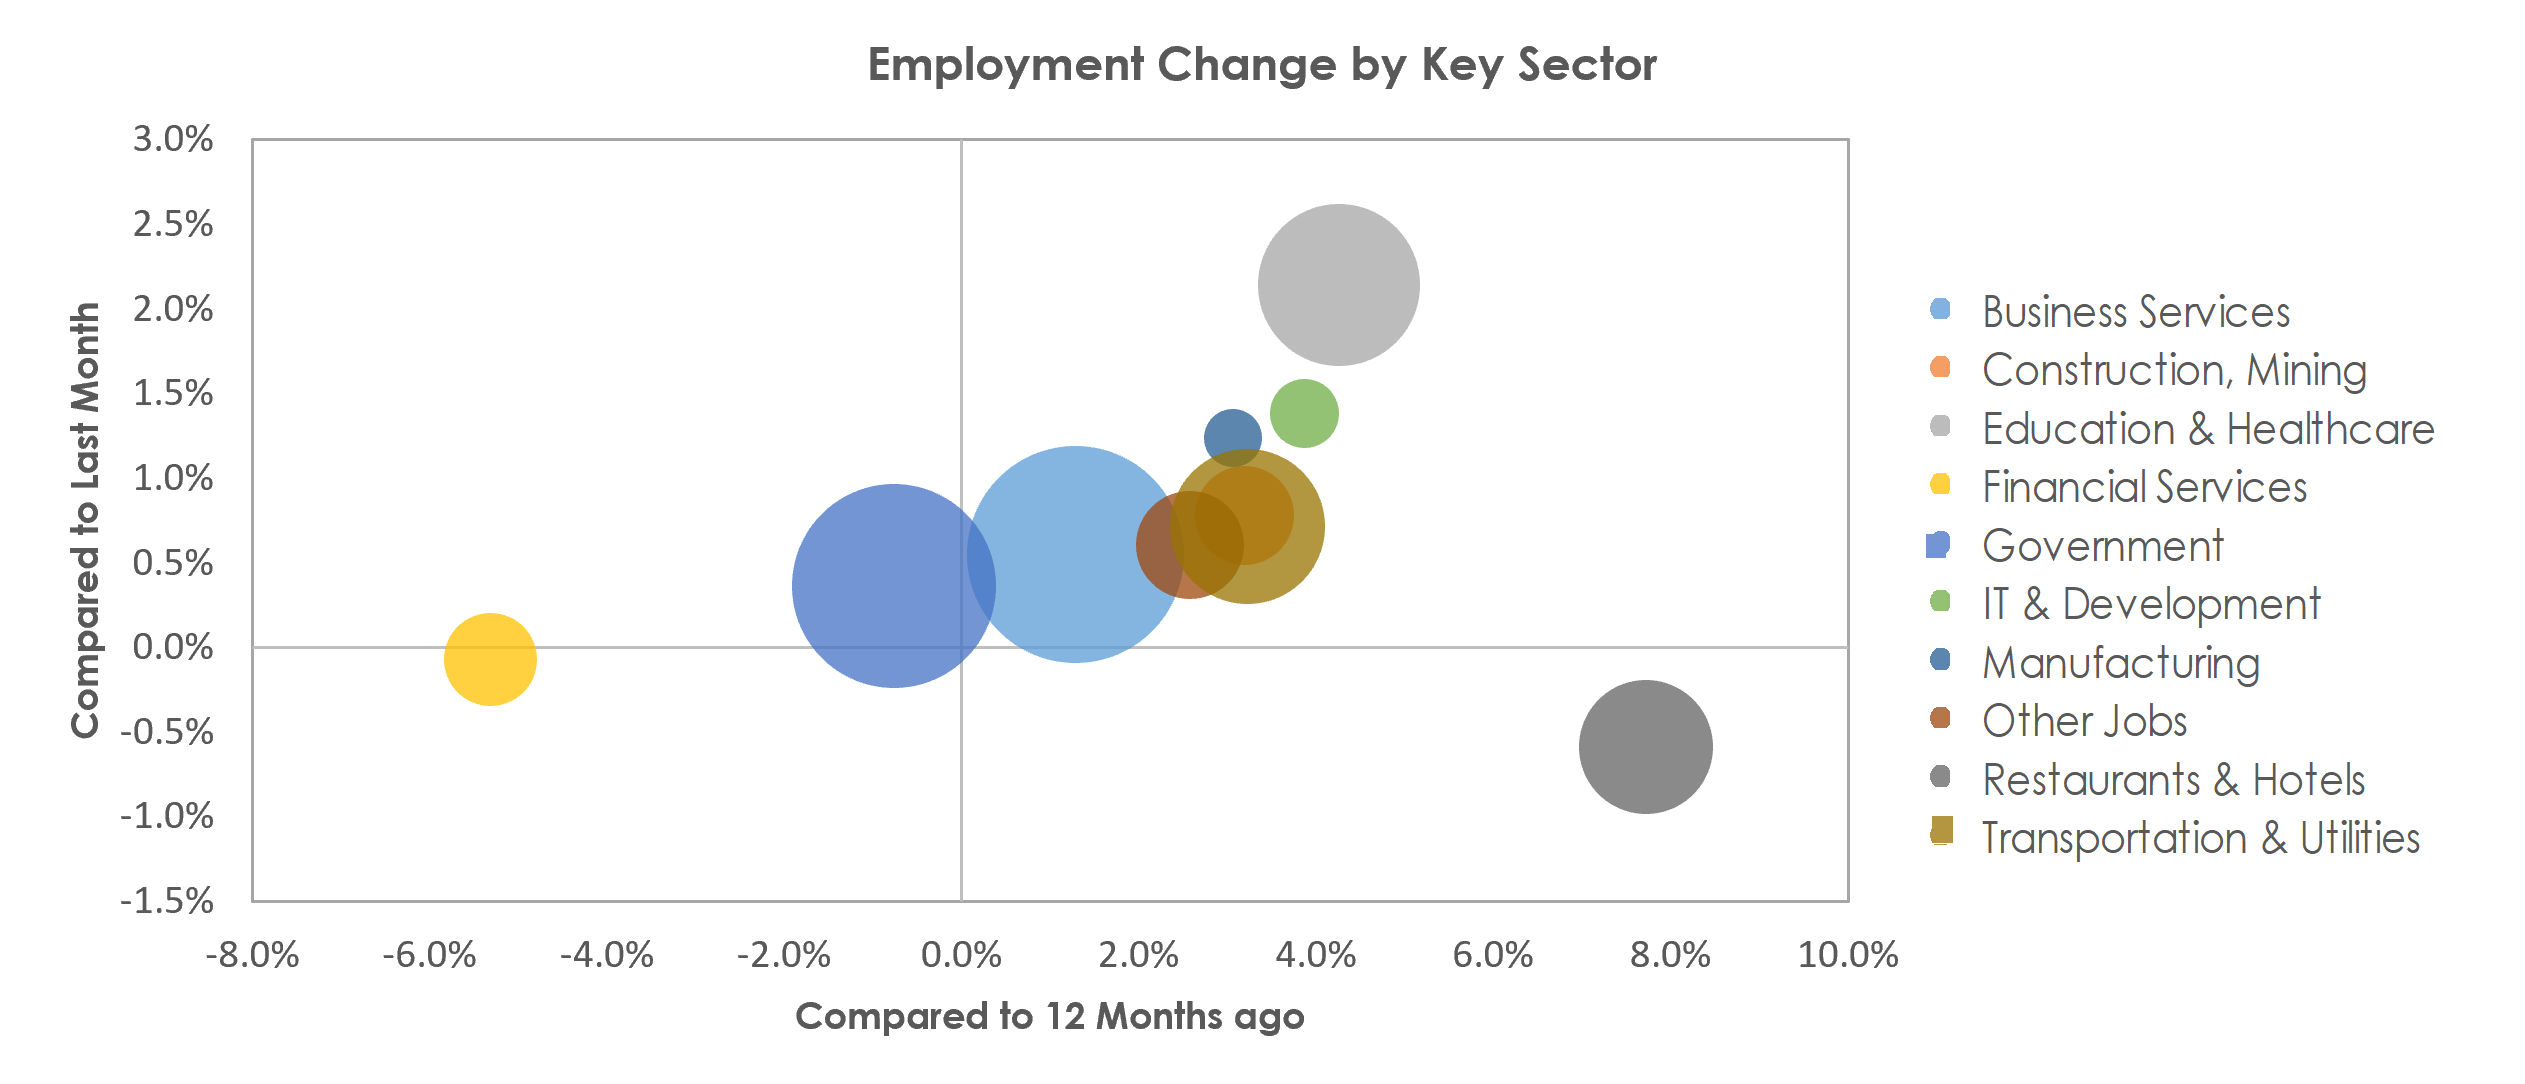 Washington-Arlington-Alexandria, DC-VA-MD-WV Unemployment by Industry October 2022